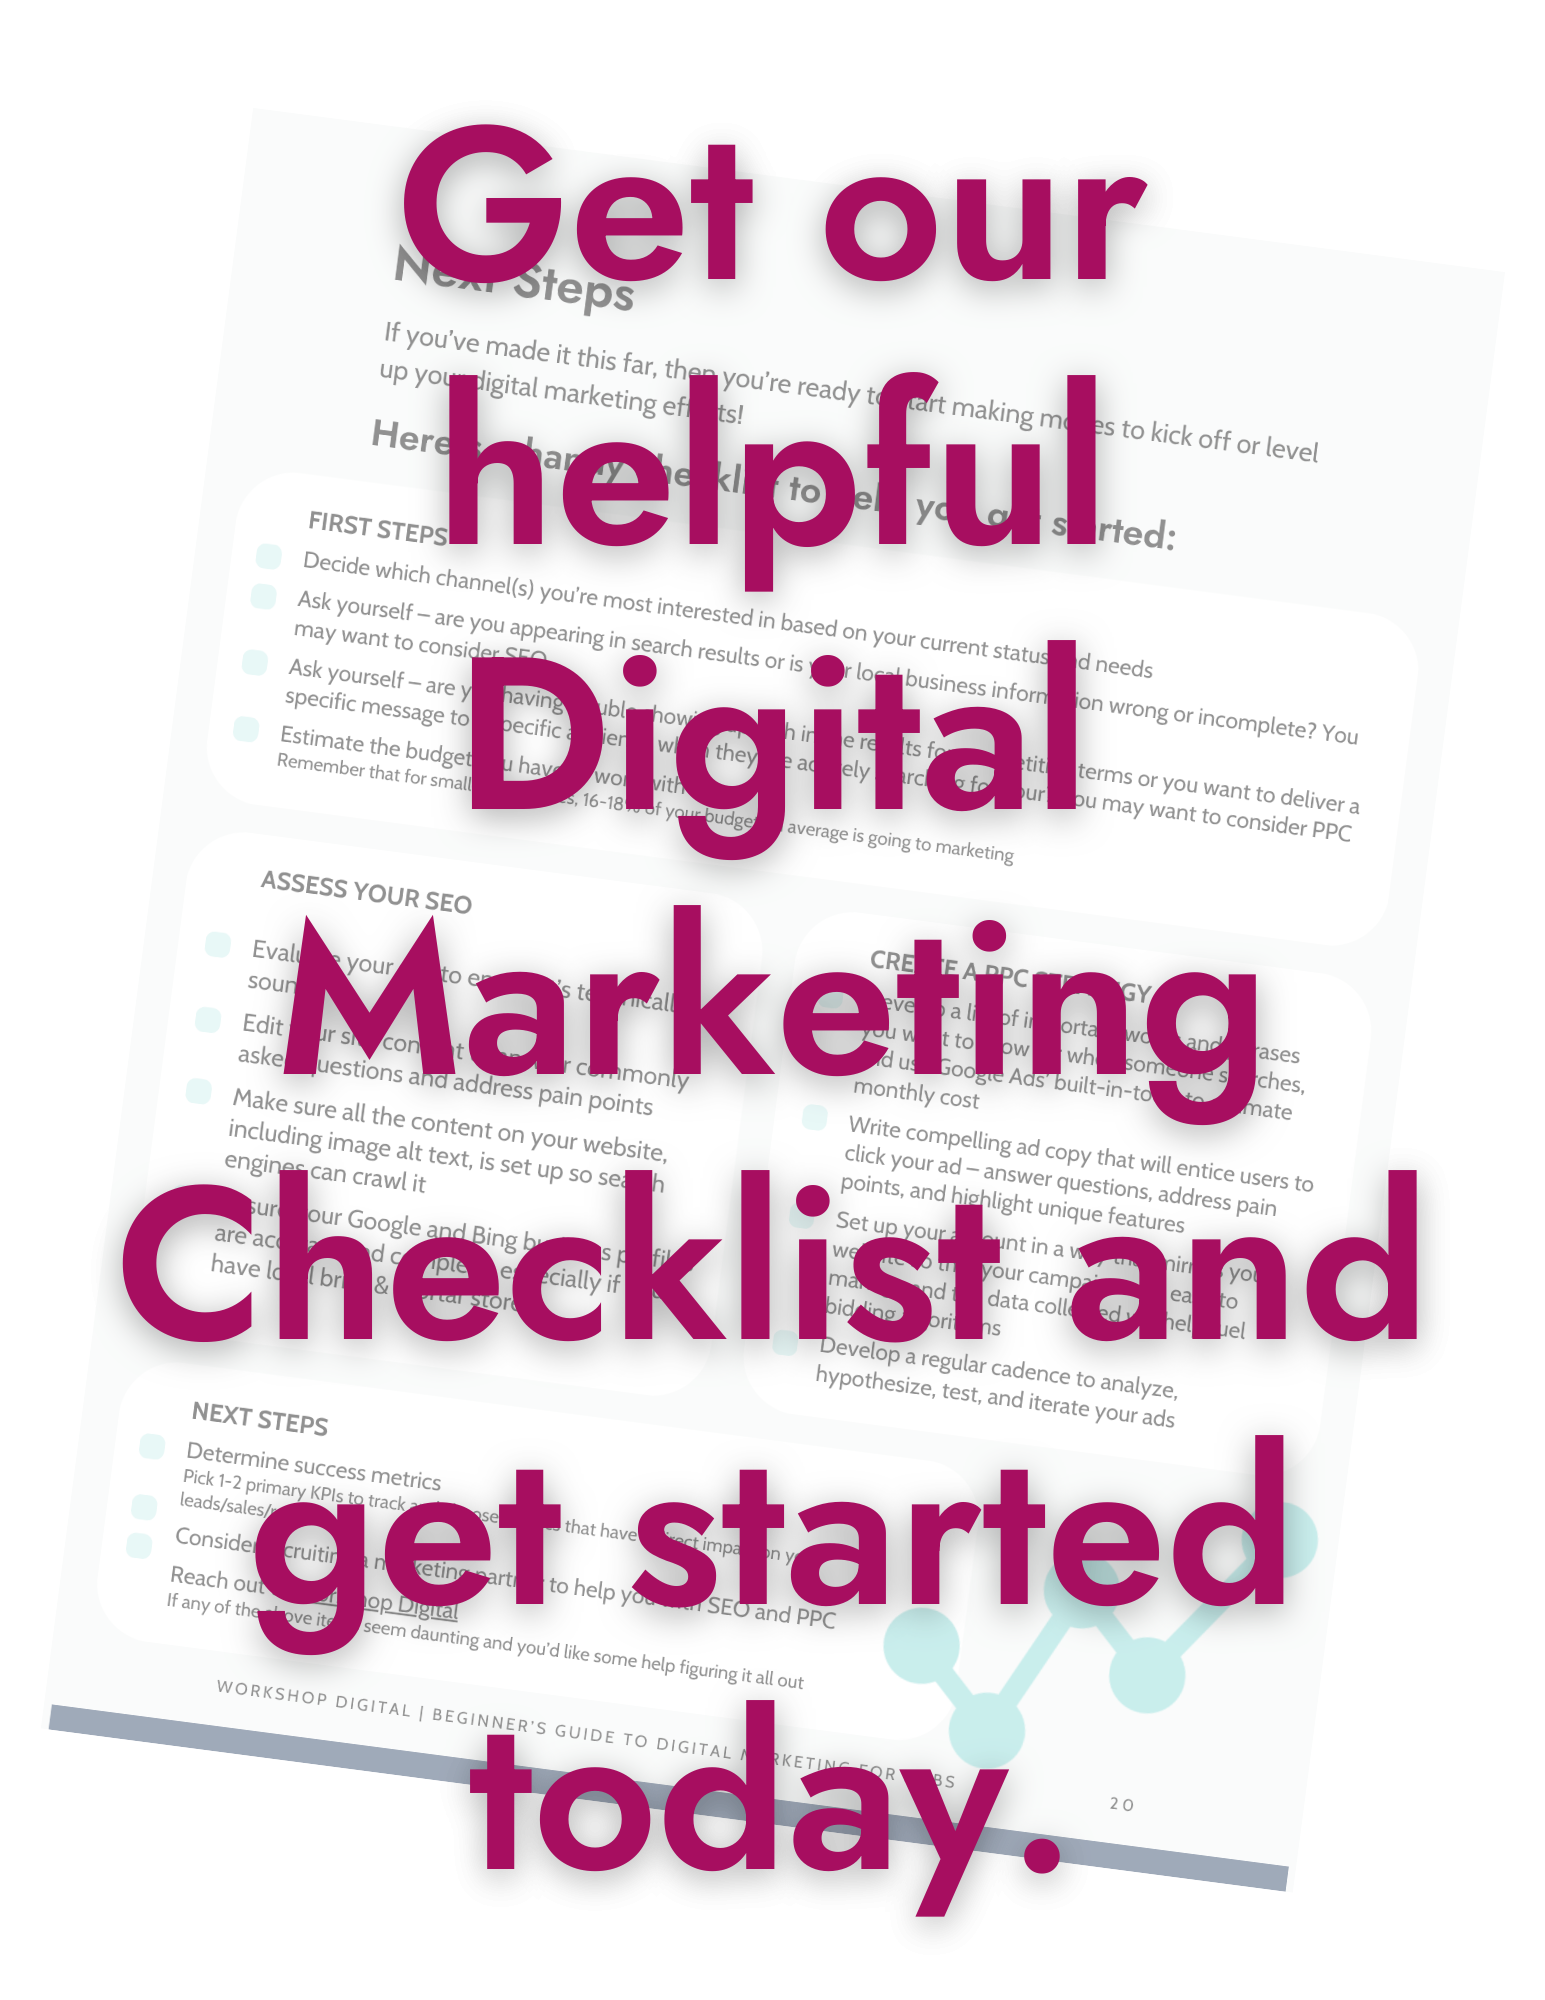 Beginner's Guide to Digital Marketing checklist image